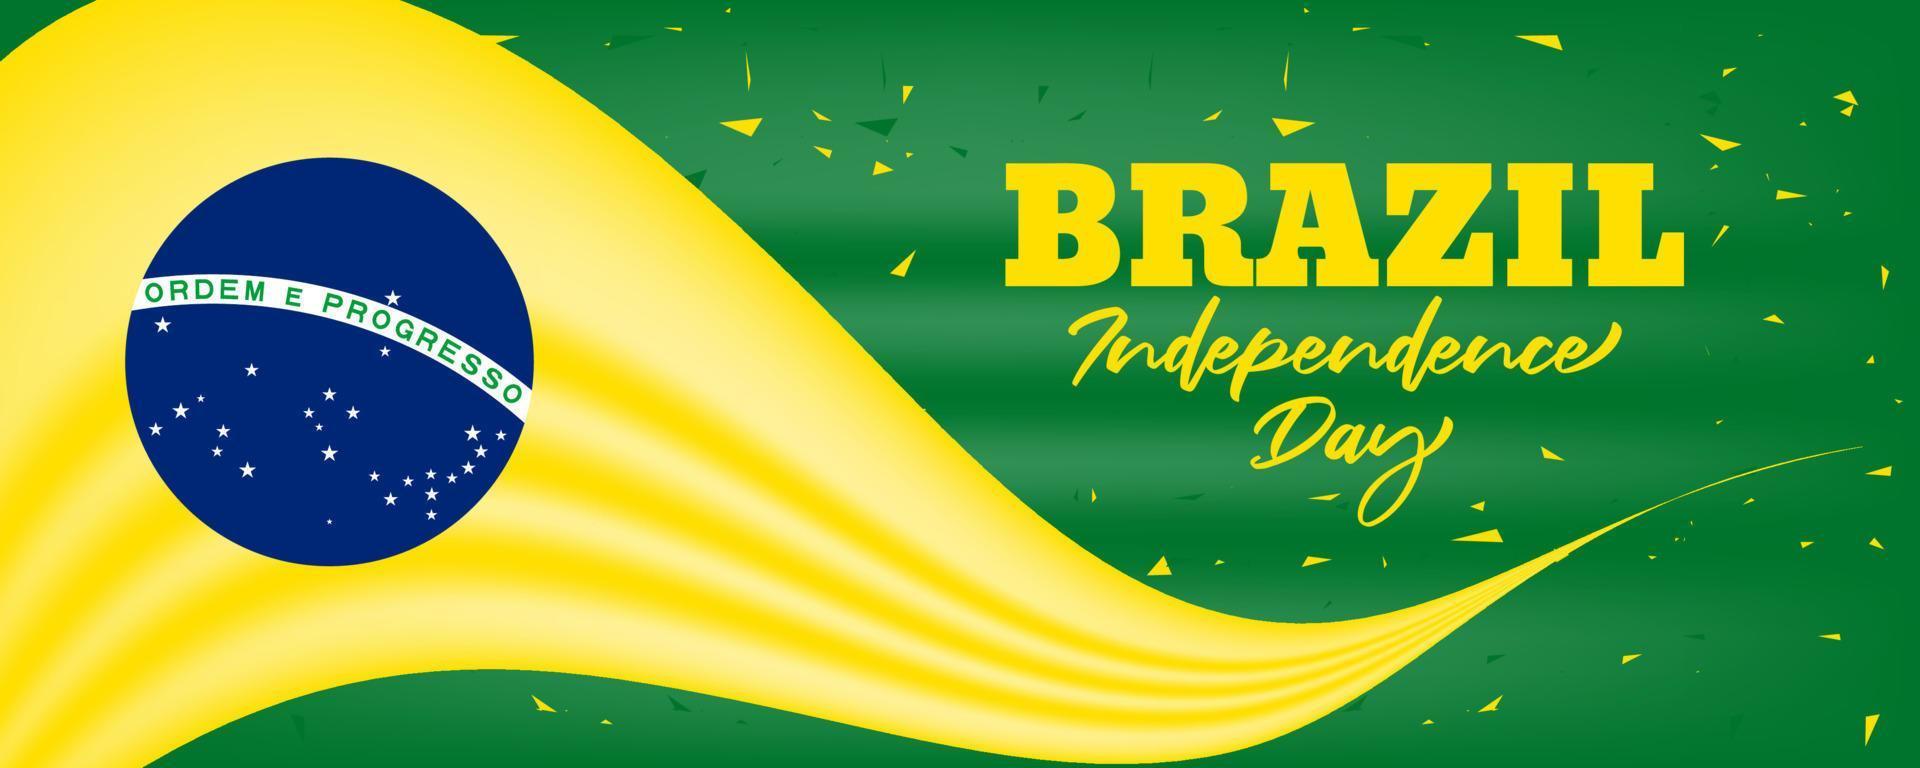 Brazil Independence day background  with Brazil flag-waving design illustration vector